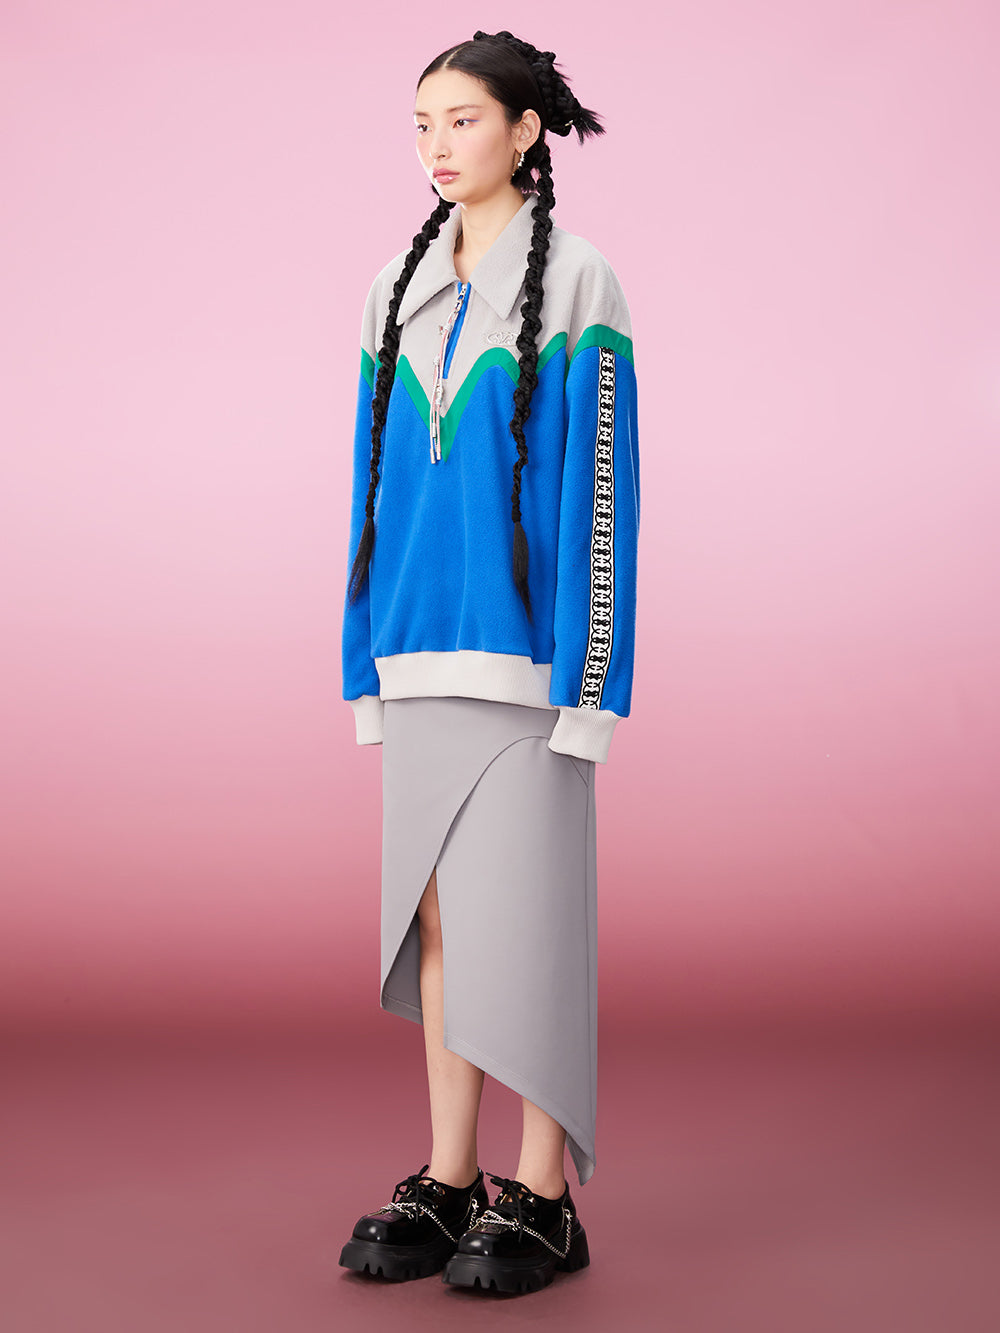 MUKZIN Color Block Warm Versatile Casual Style Comfortable Sweatshirt